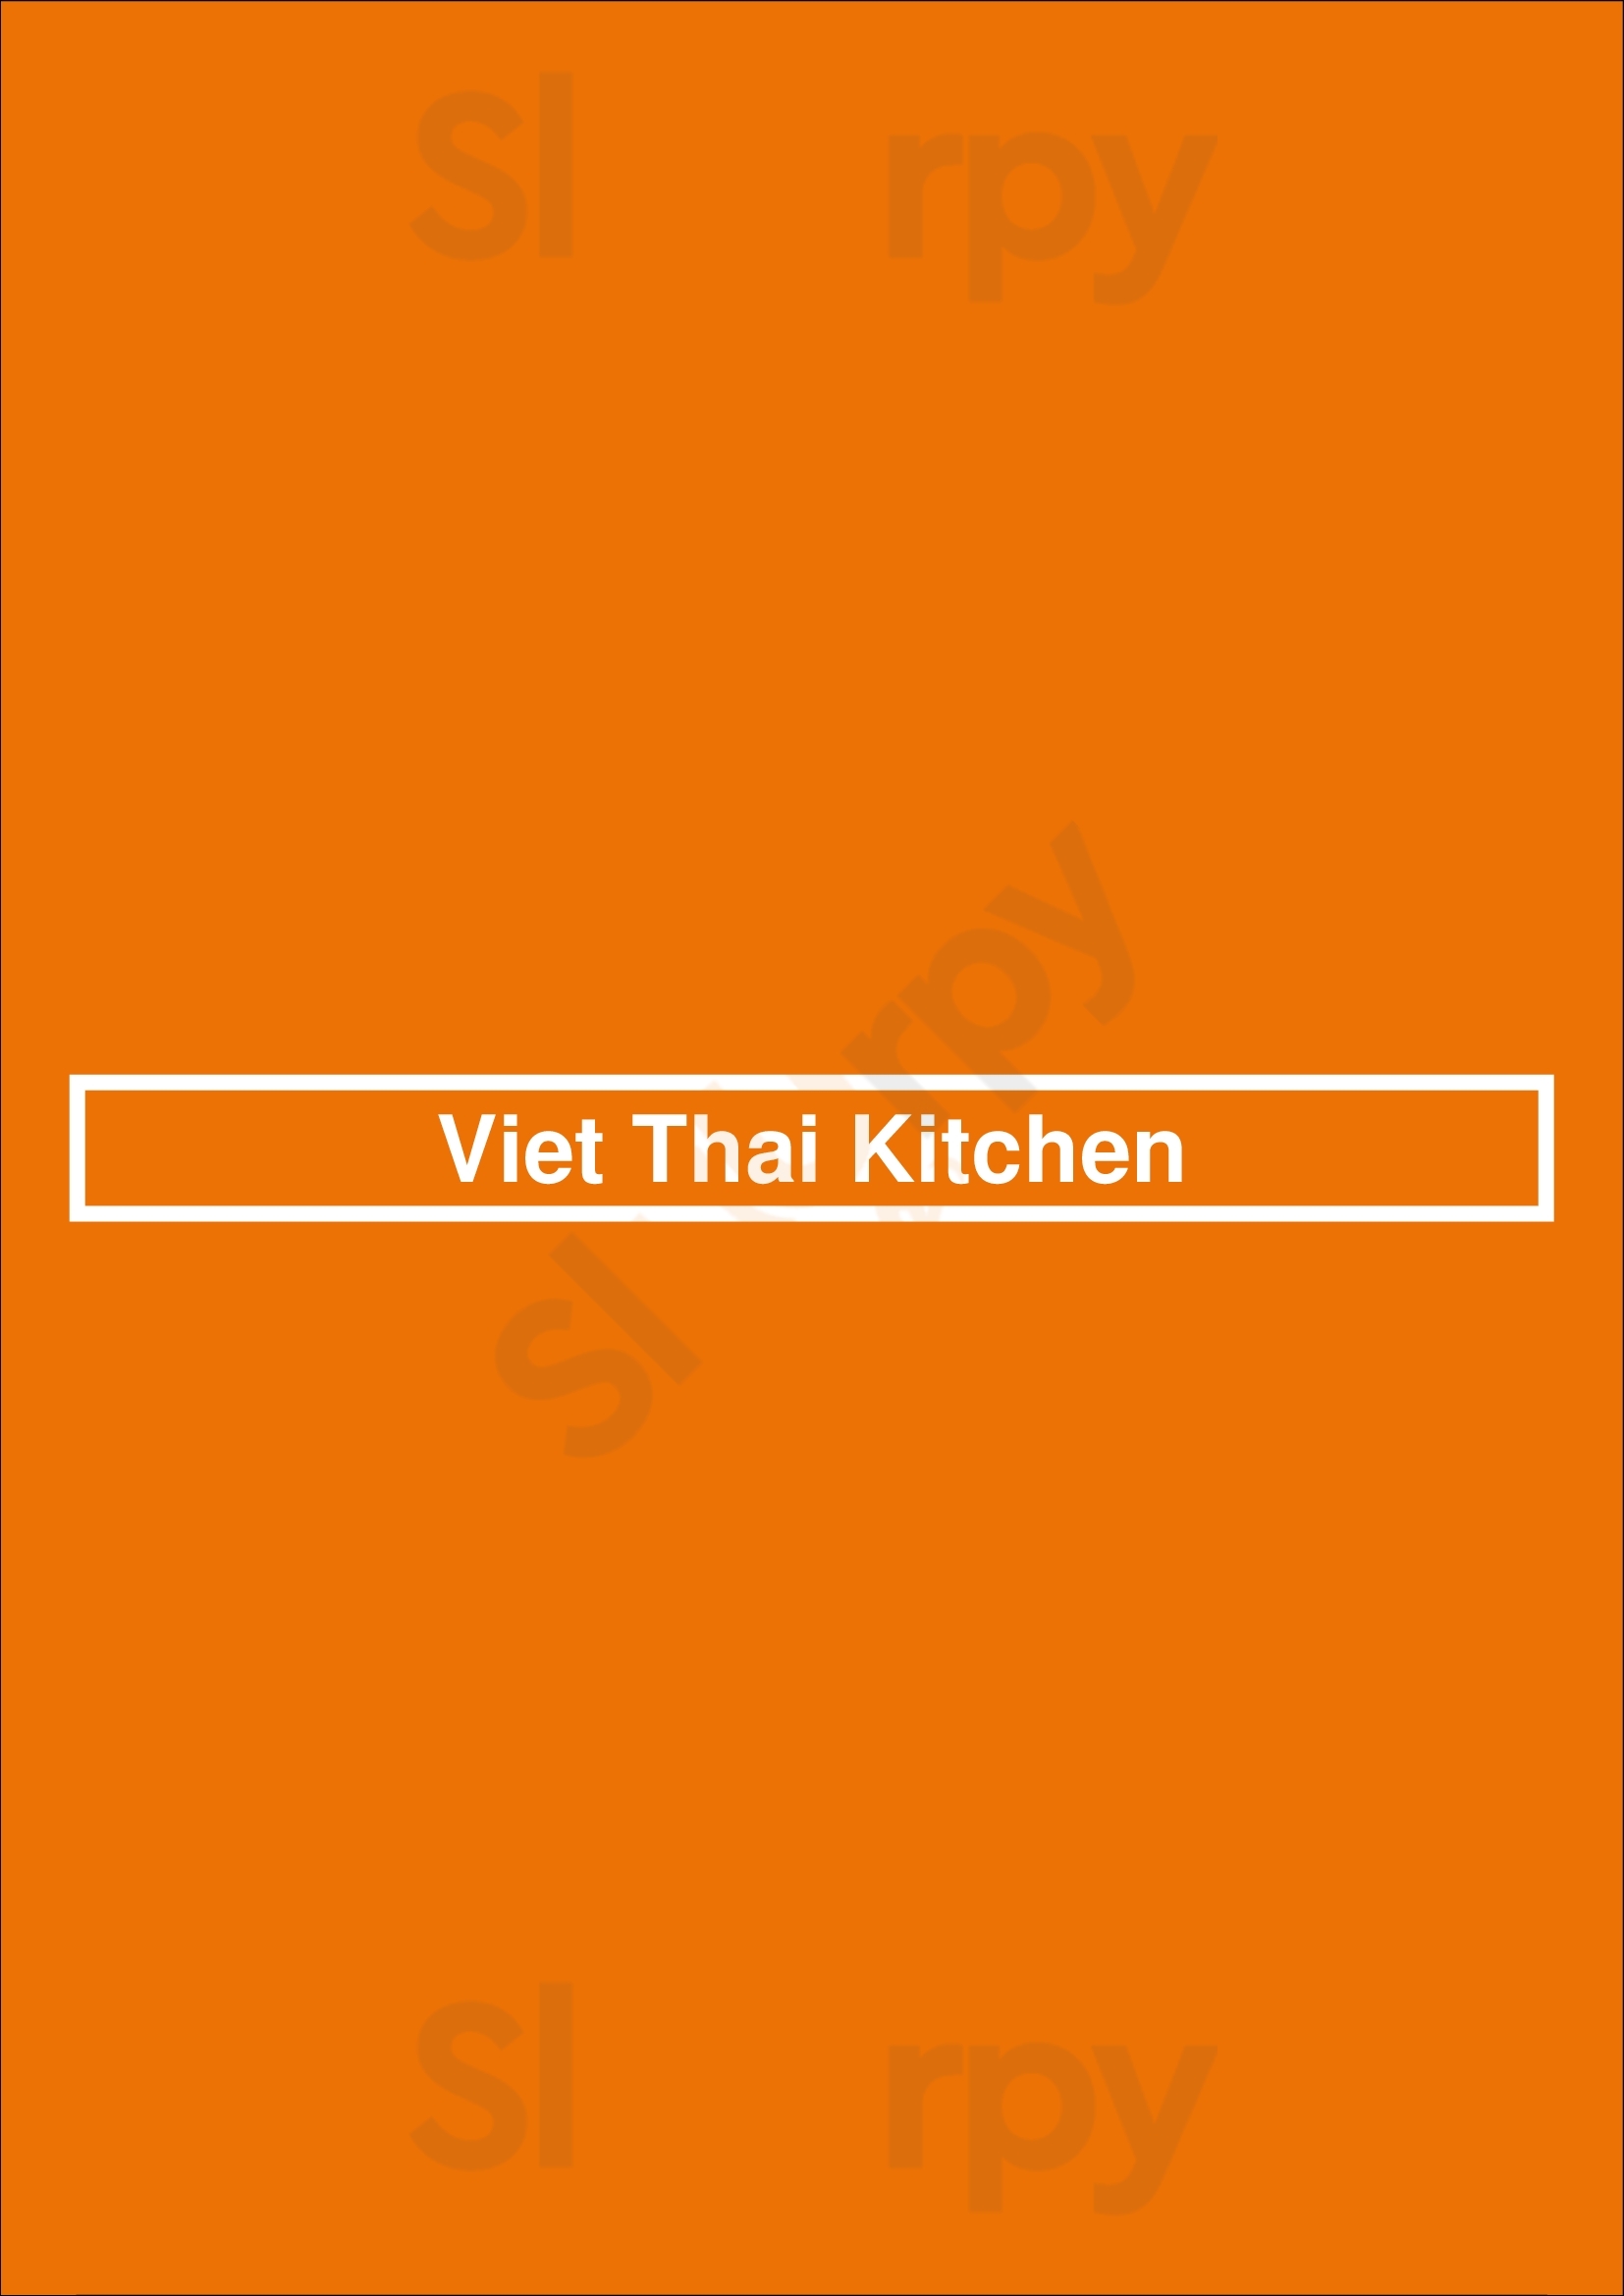 Viet Thai Kitchen Toronto Menu - 1